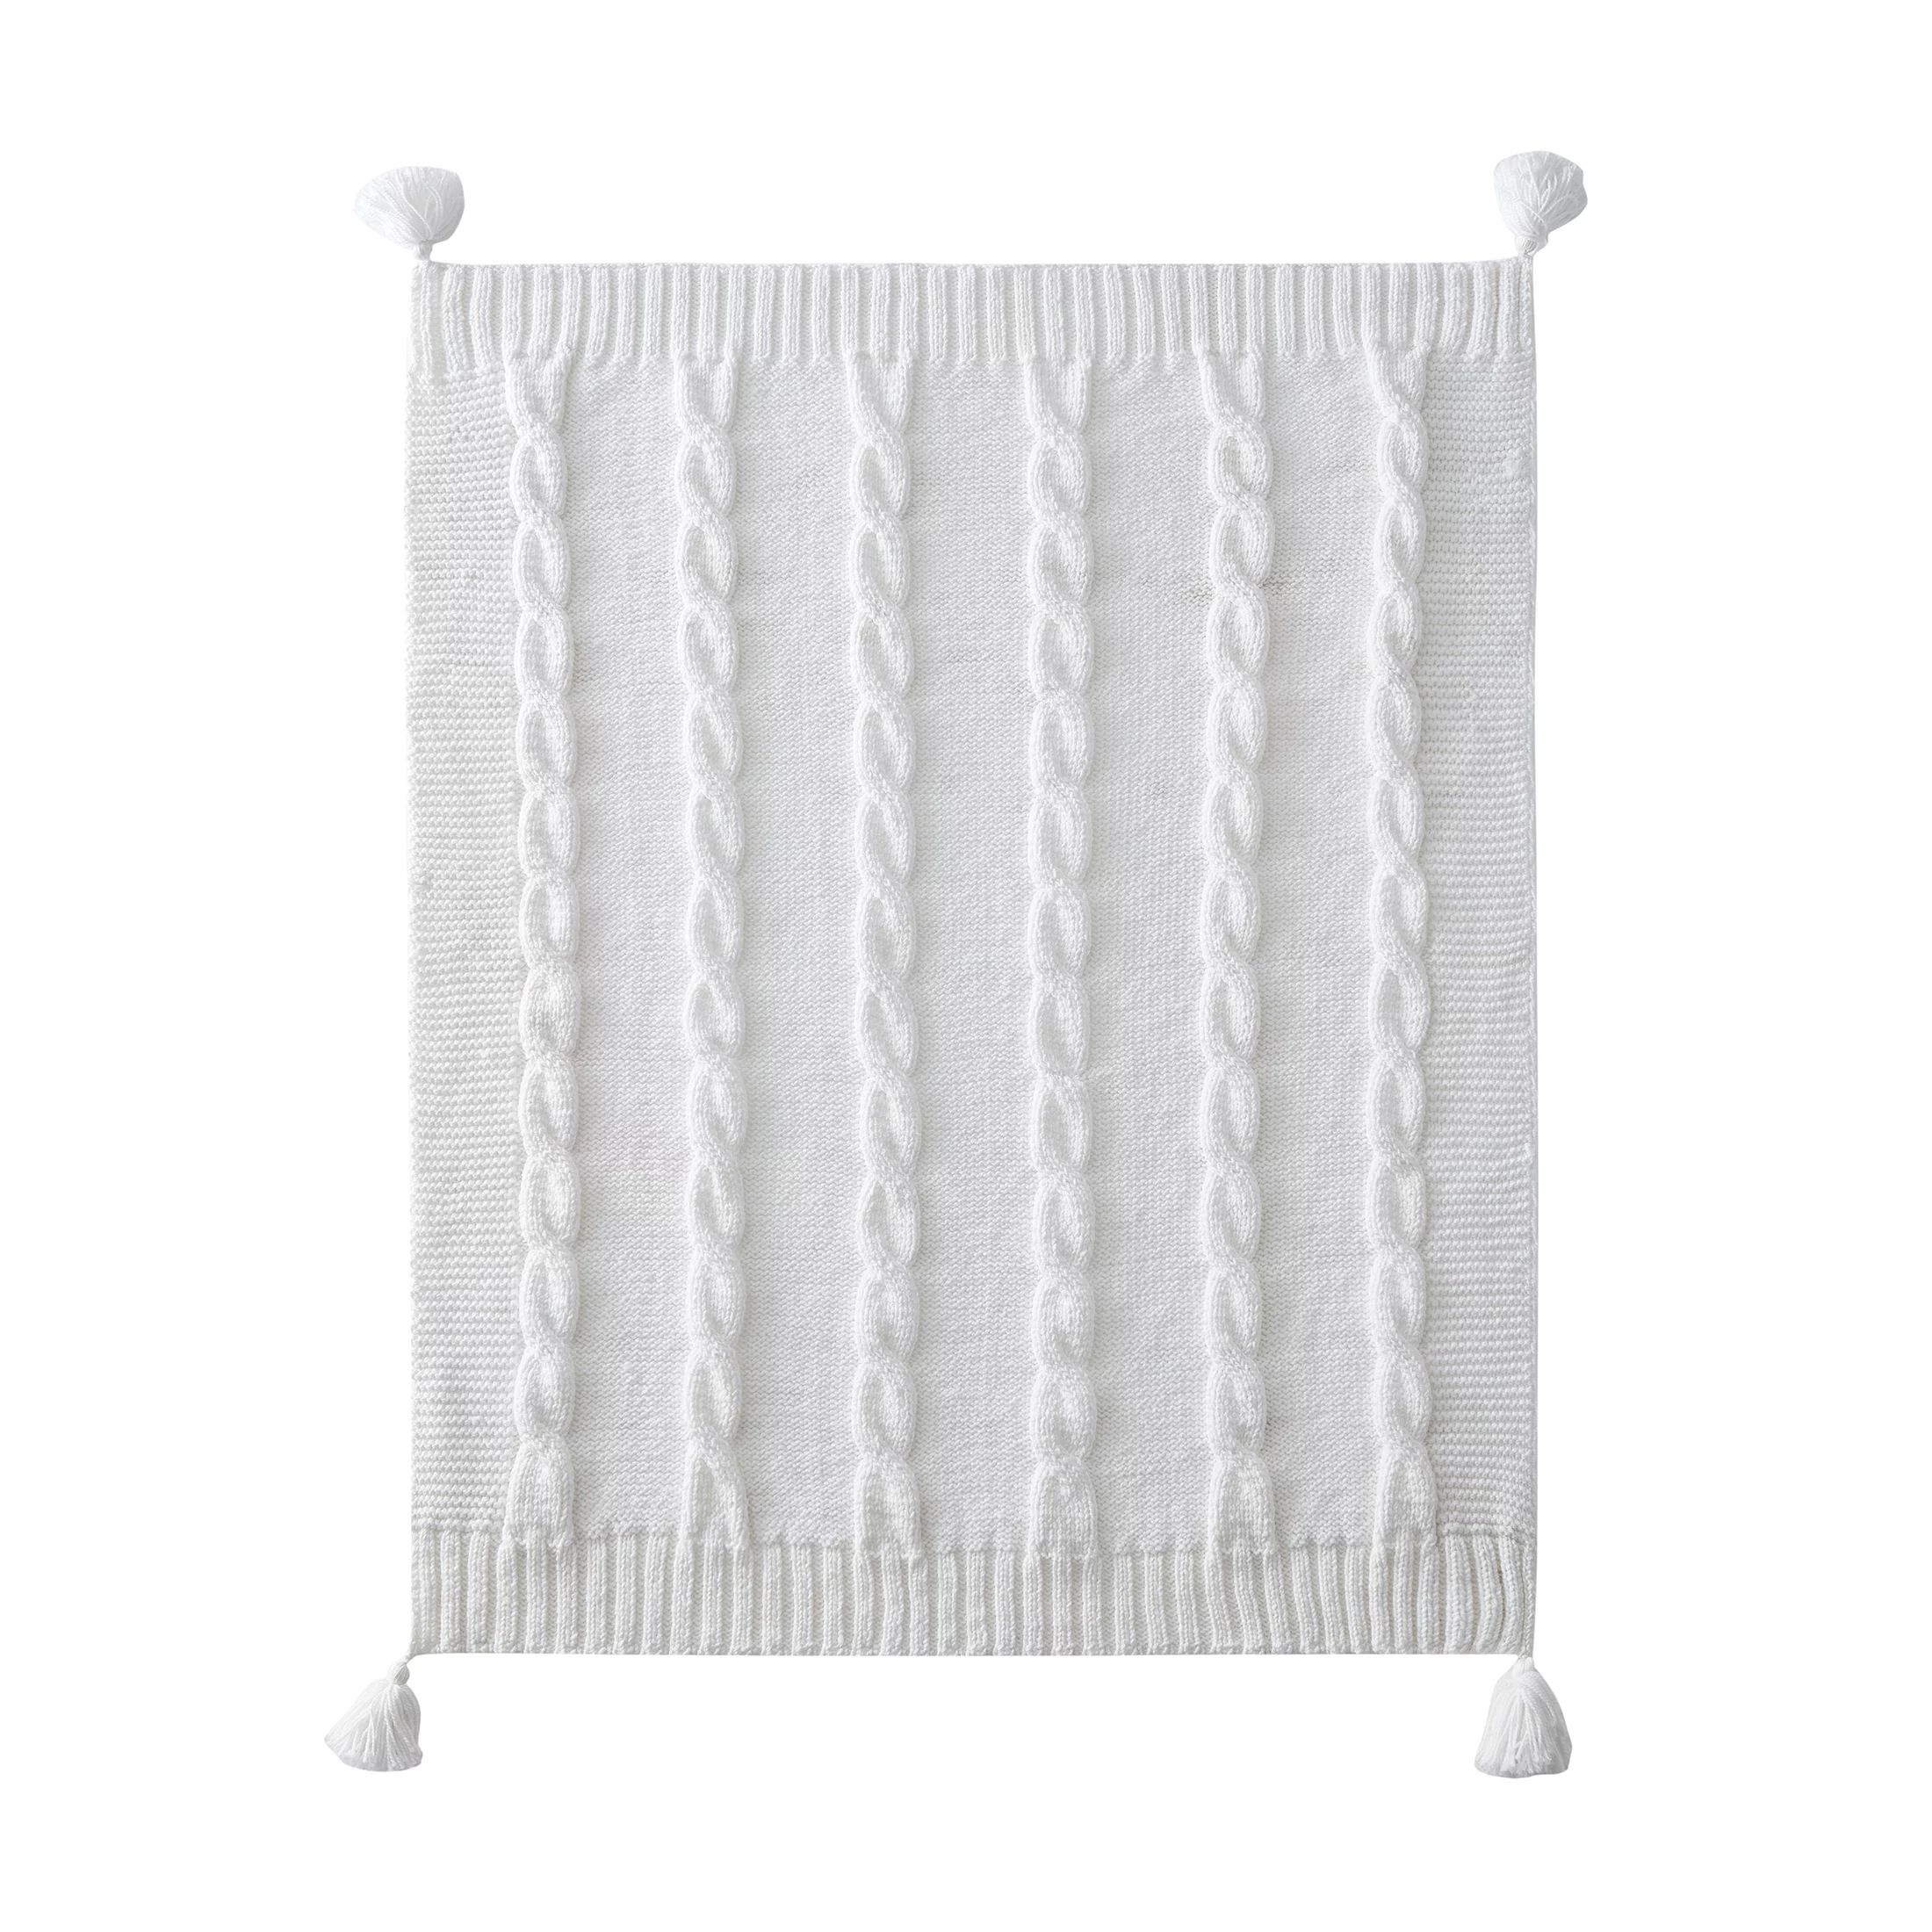 My Texas House Willow Cable Knit Cotton Throw, 50" x 60", White | Walmart (US)